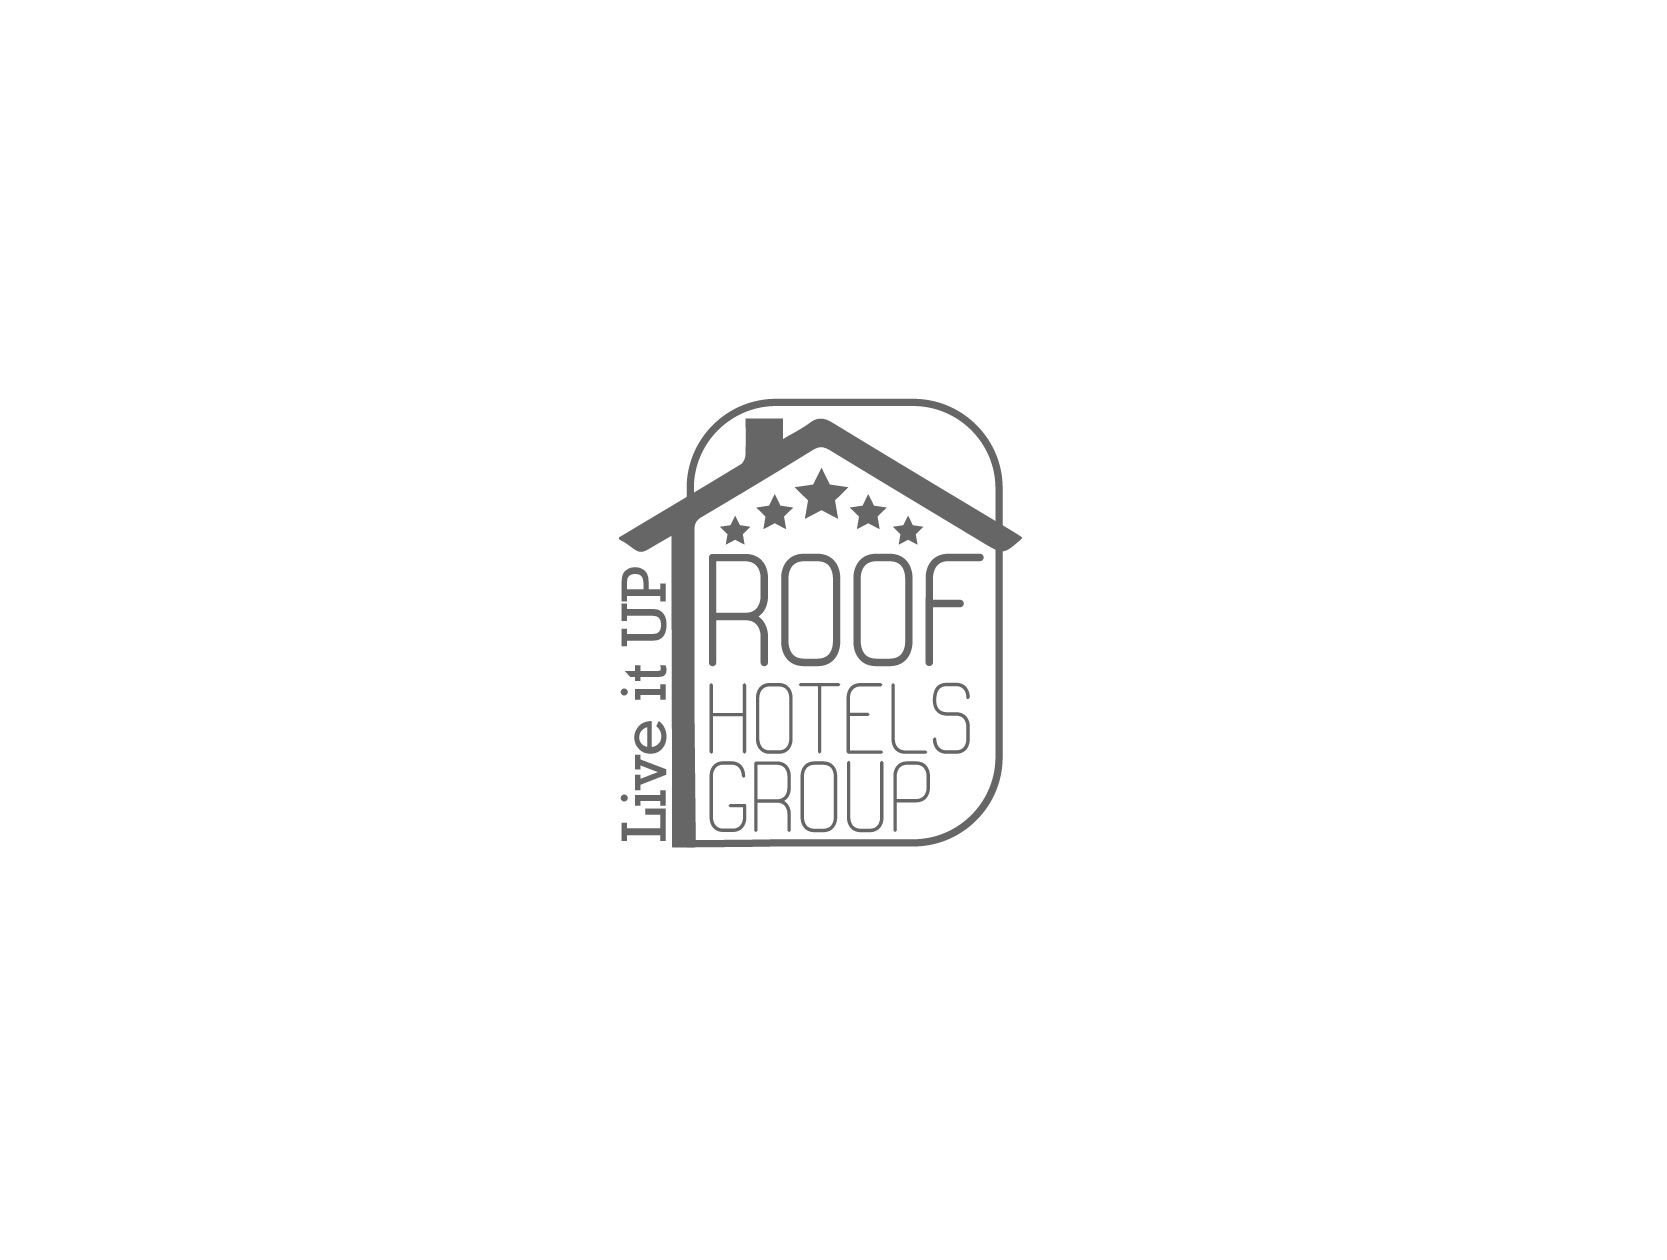 Логотип для Roof hotels group - дизайнер Kate_fiero